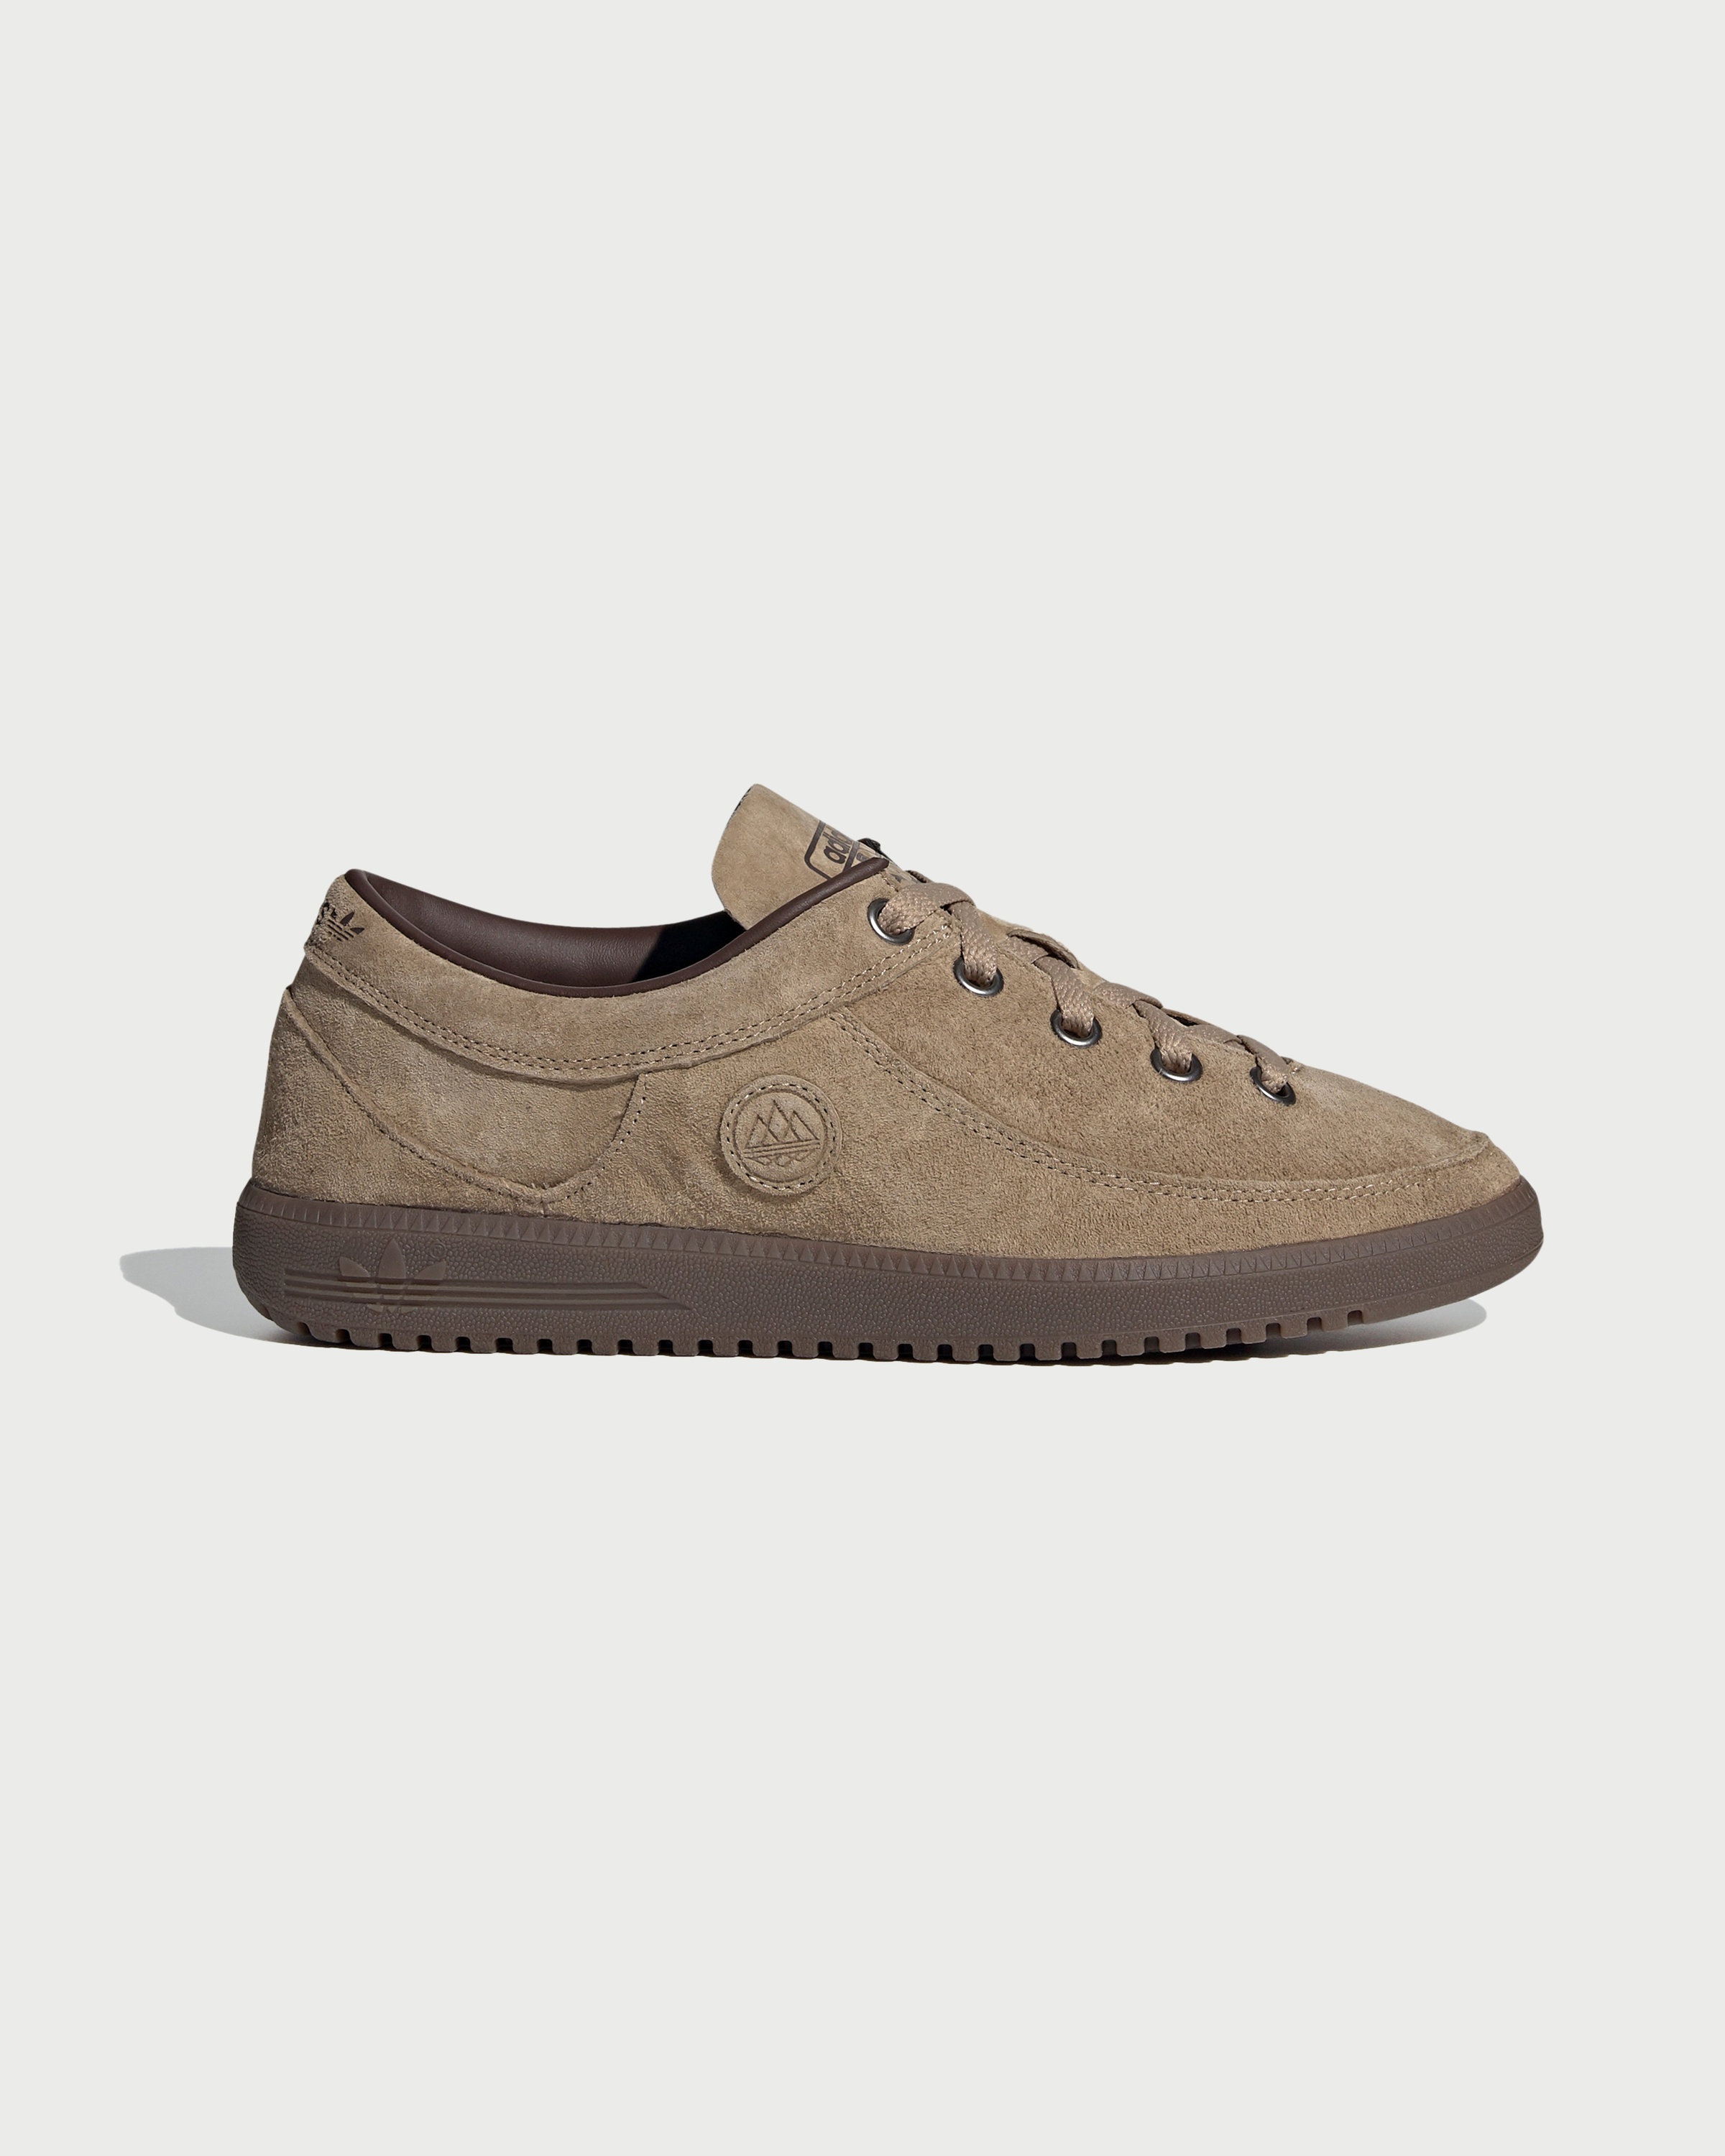 Adidas – Newrad Spezial Brown - Low Top Sneakers - Brown - Image 1